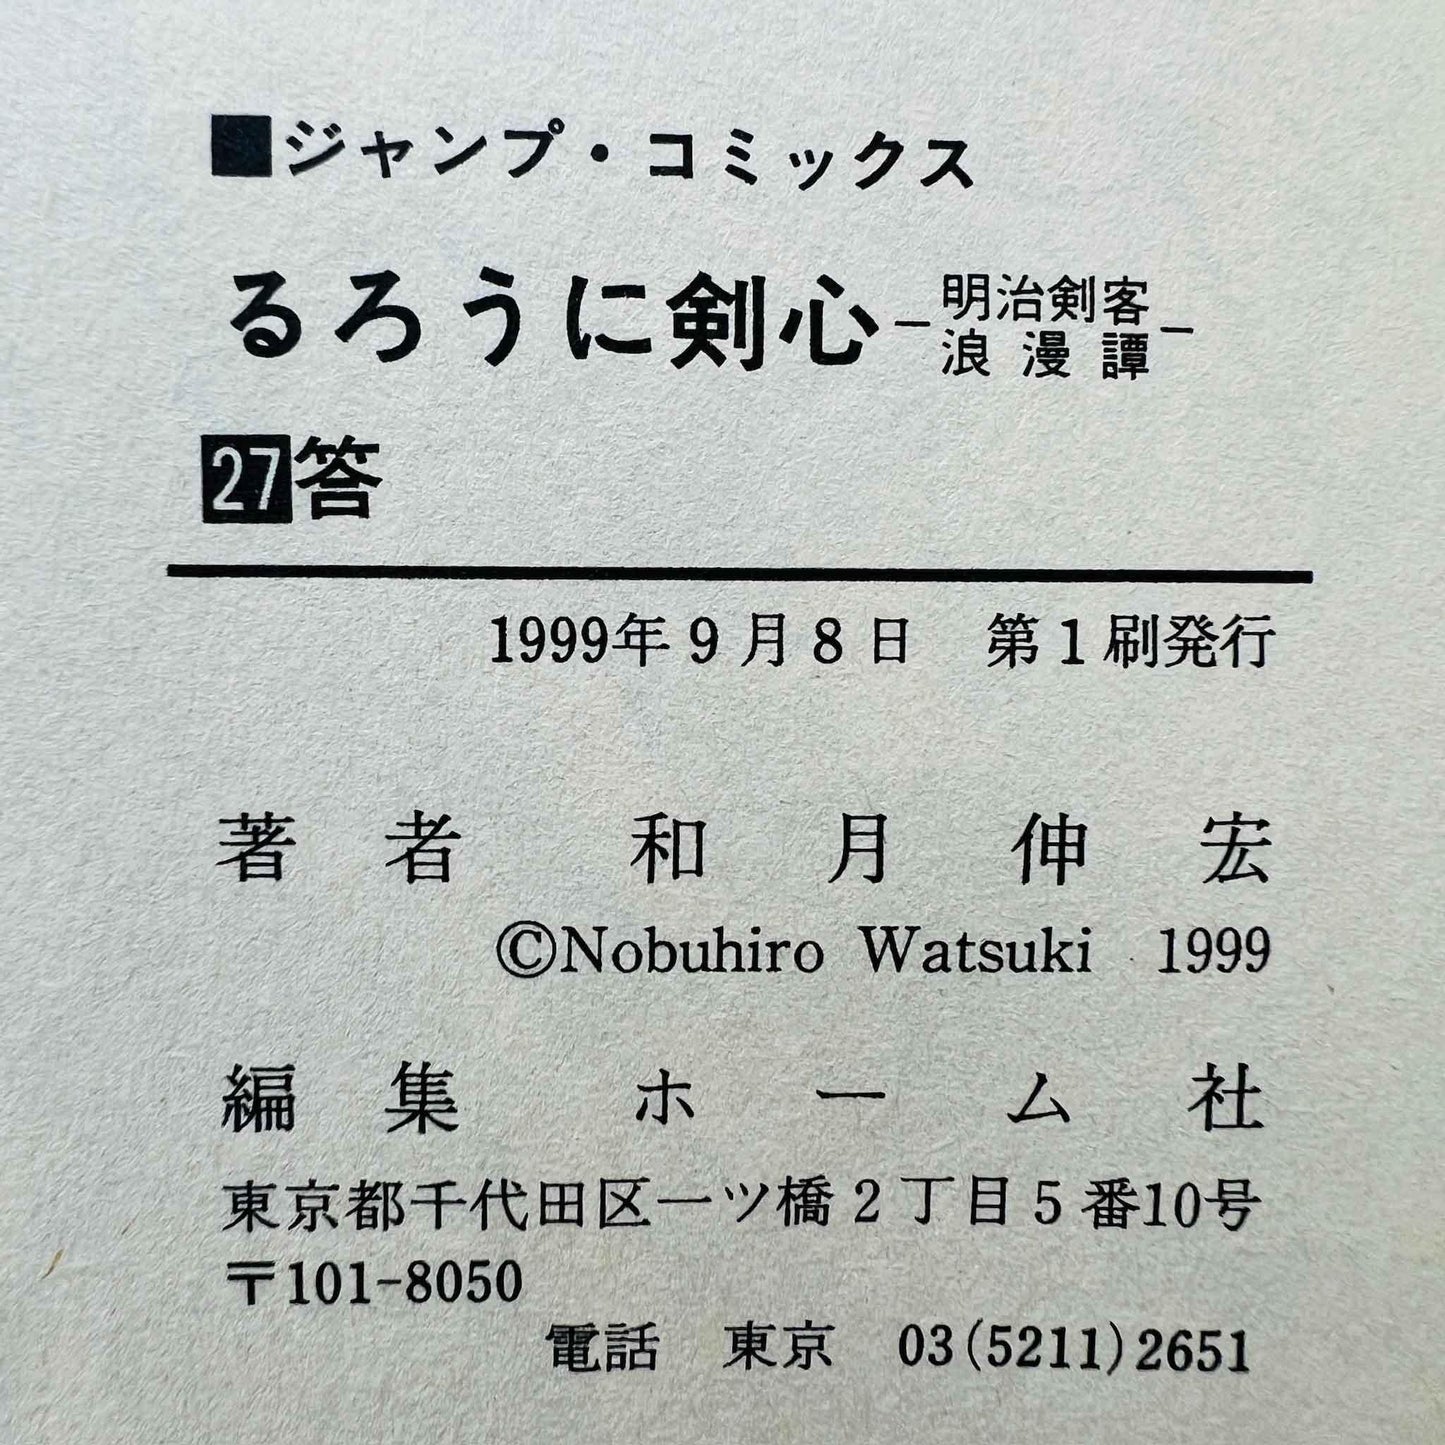 Rurouni Kenshin - Volume 27 - 1stPrint.net - 1st First Print Edition Manga Store - M-KENSH-27-001